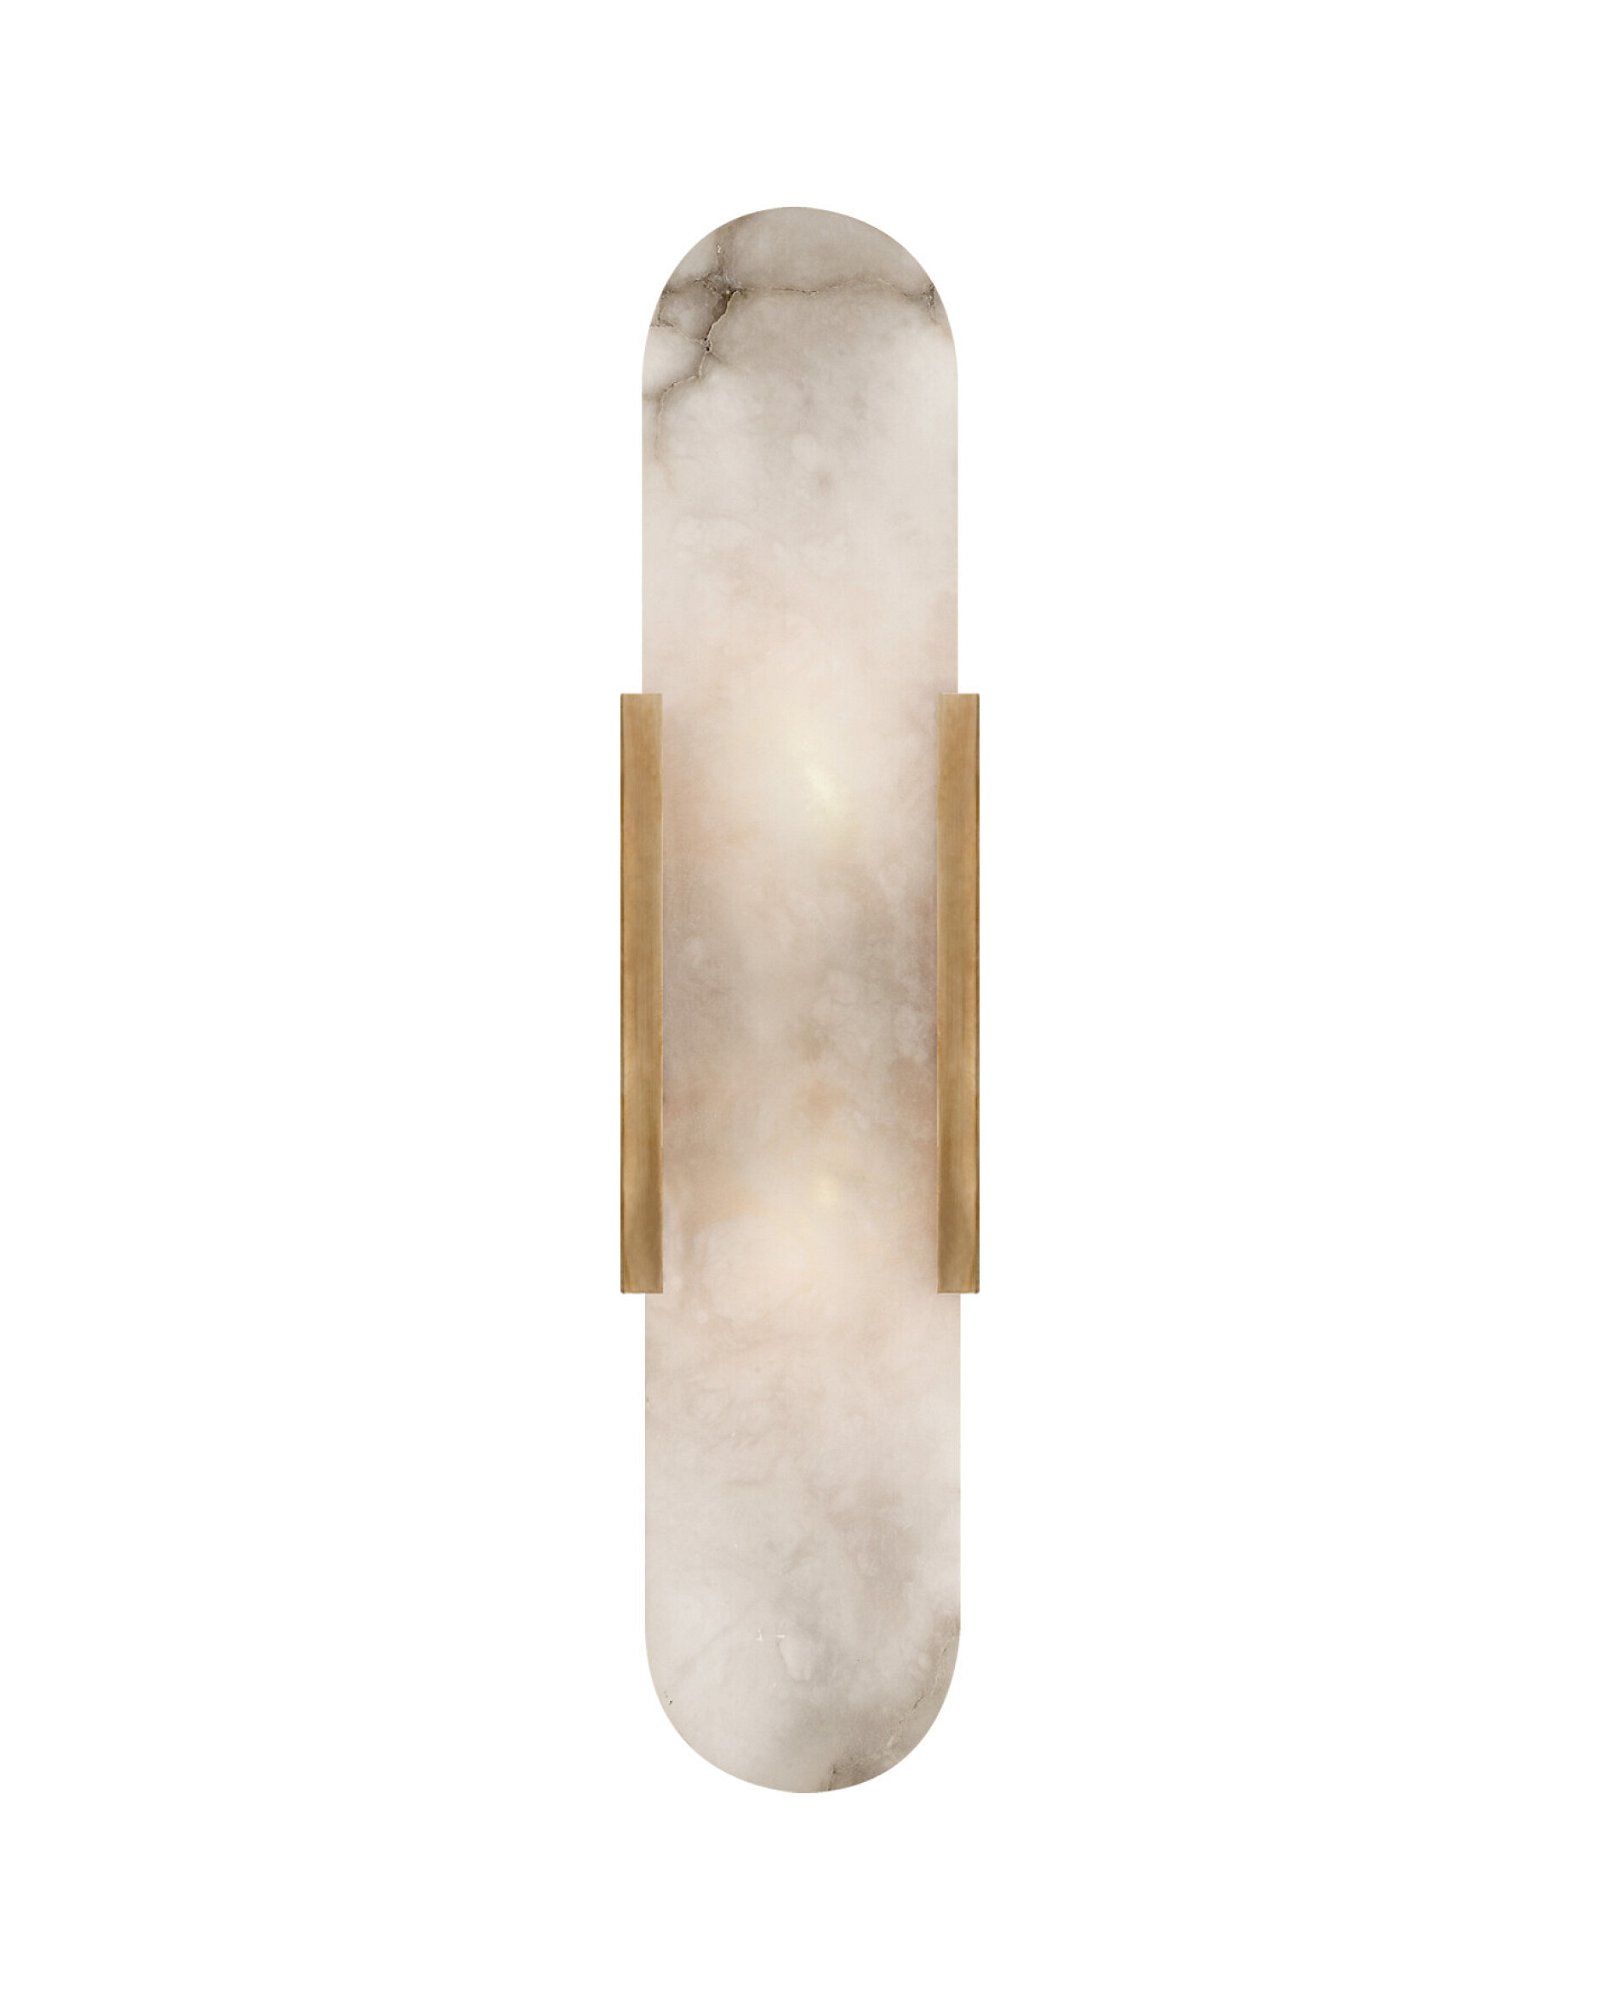 ARABELLE  Wall light Medium Sconce in Gild By Visual Comfort